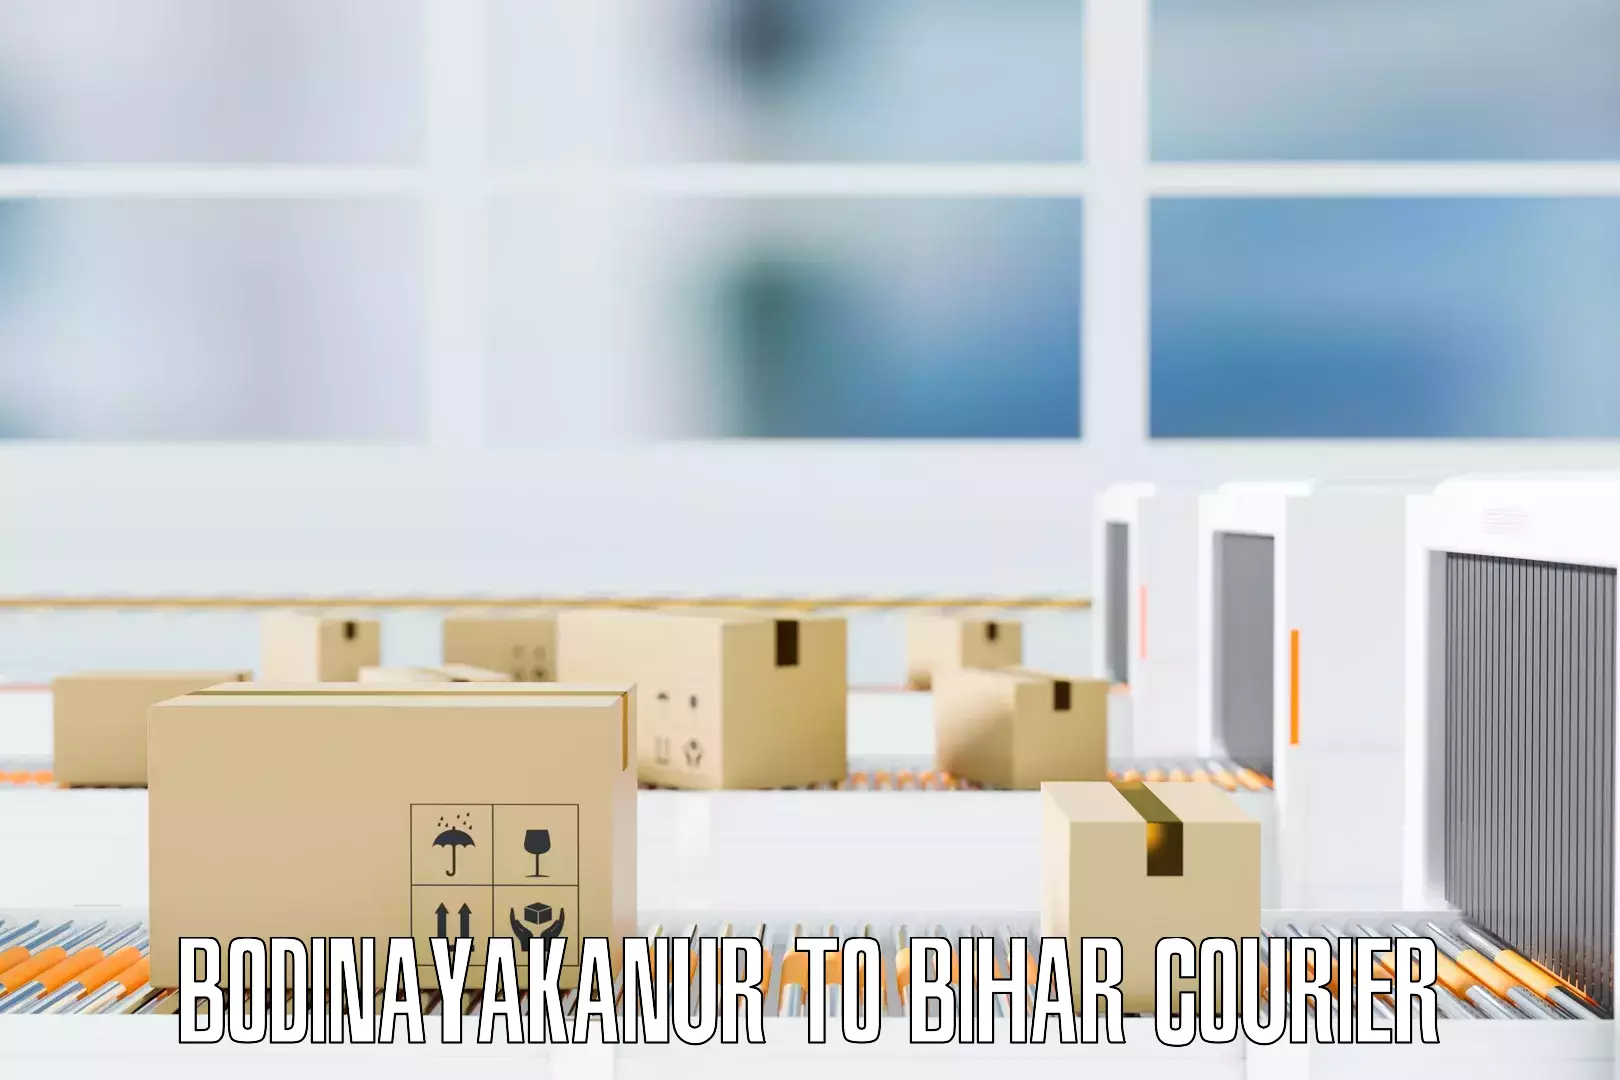 Professional moving company Bodinayakanur to Bihar